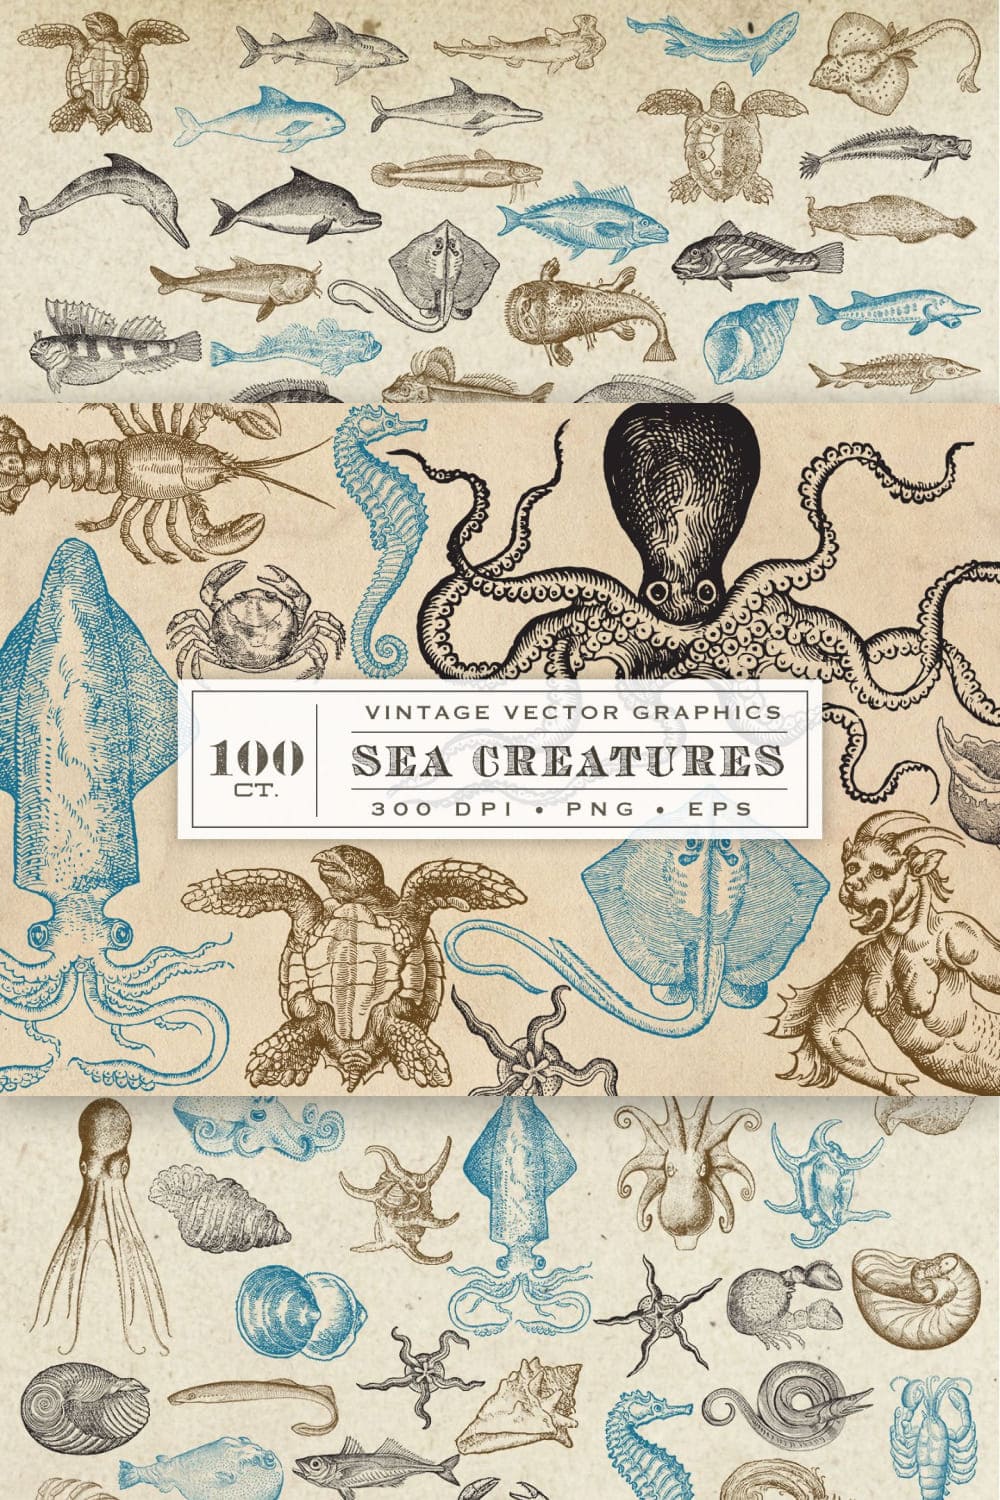 Antique Sea Creatures & Monsters pinterest image.